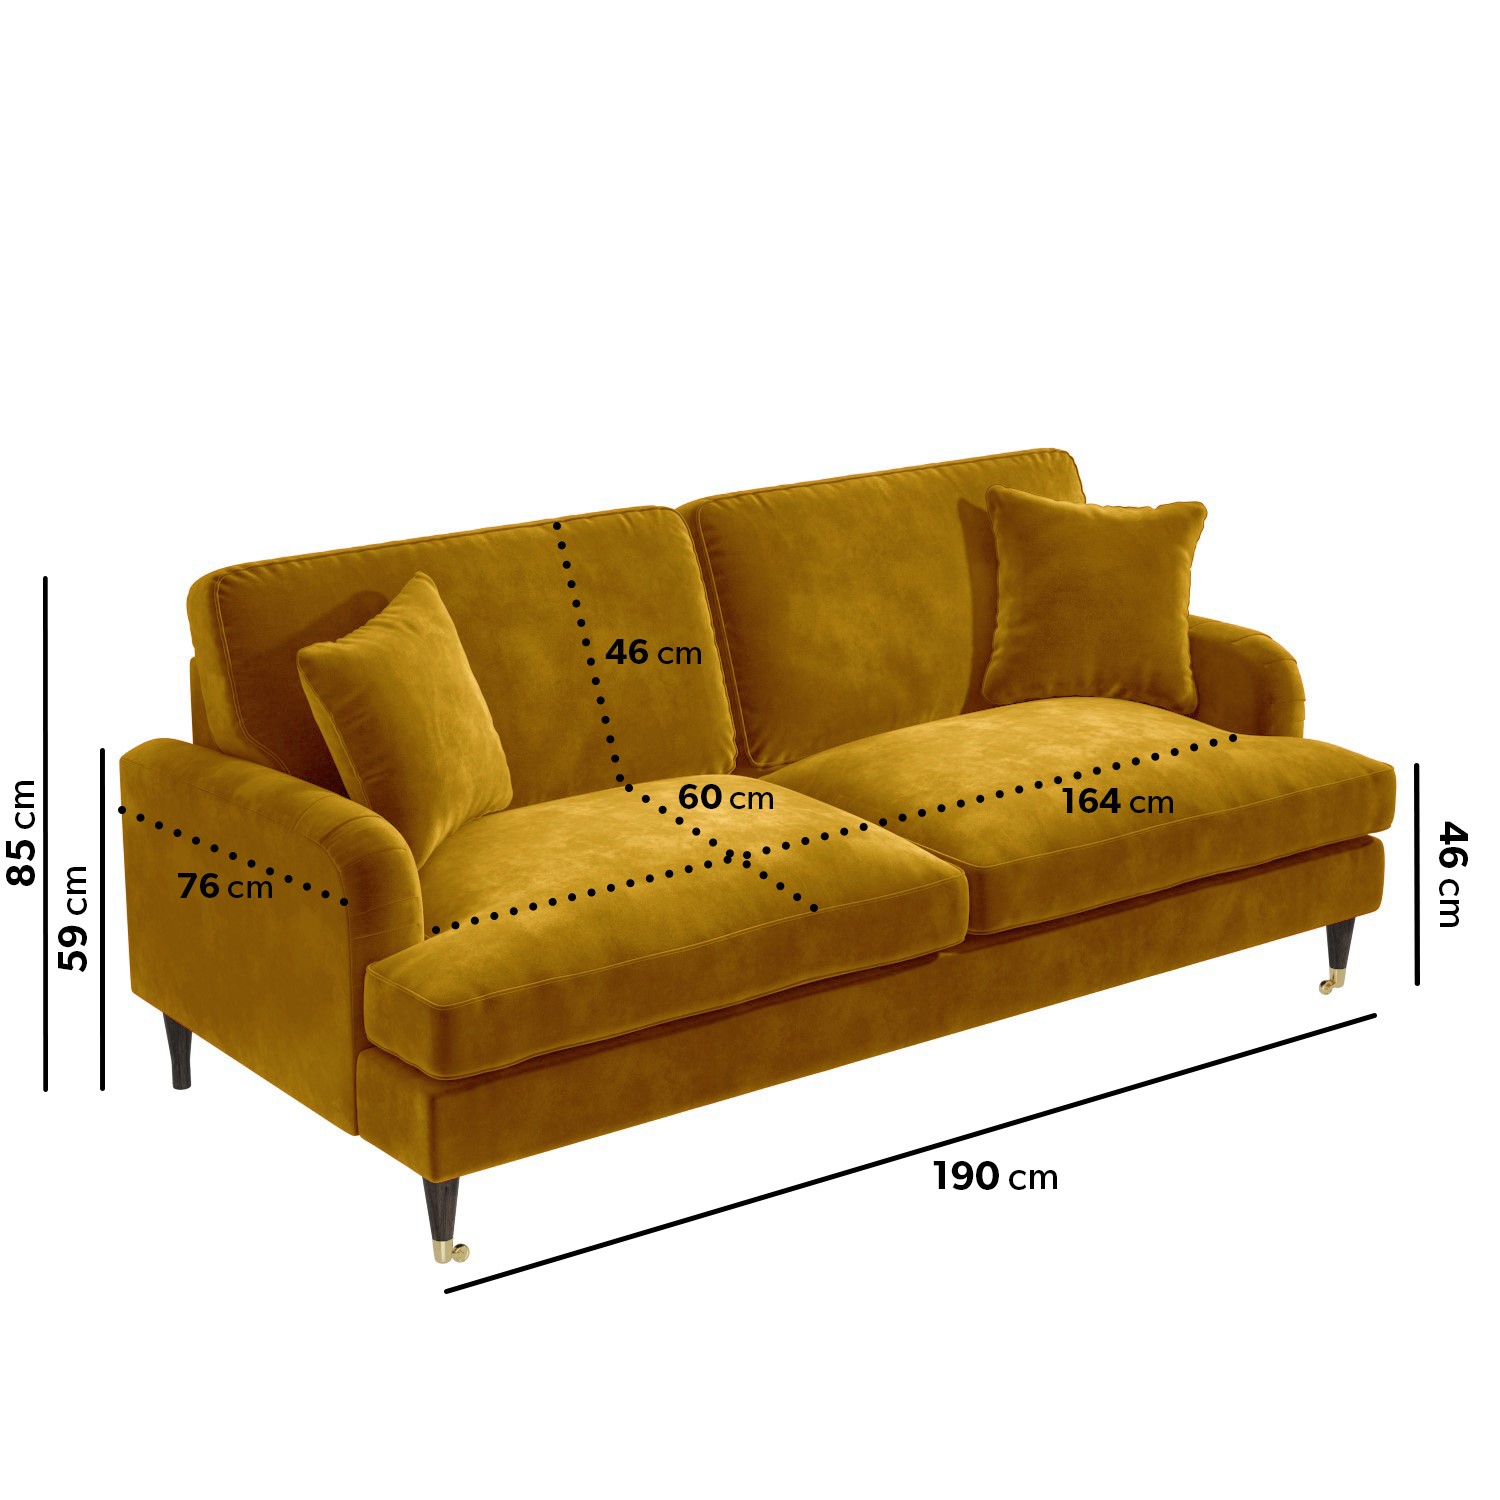 Read more about Mustard velvet 3 seater sofa payton